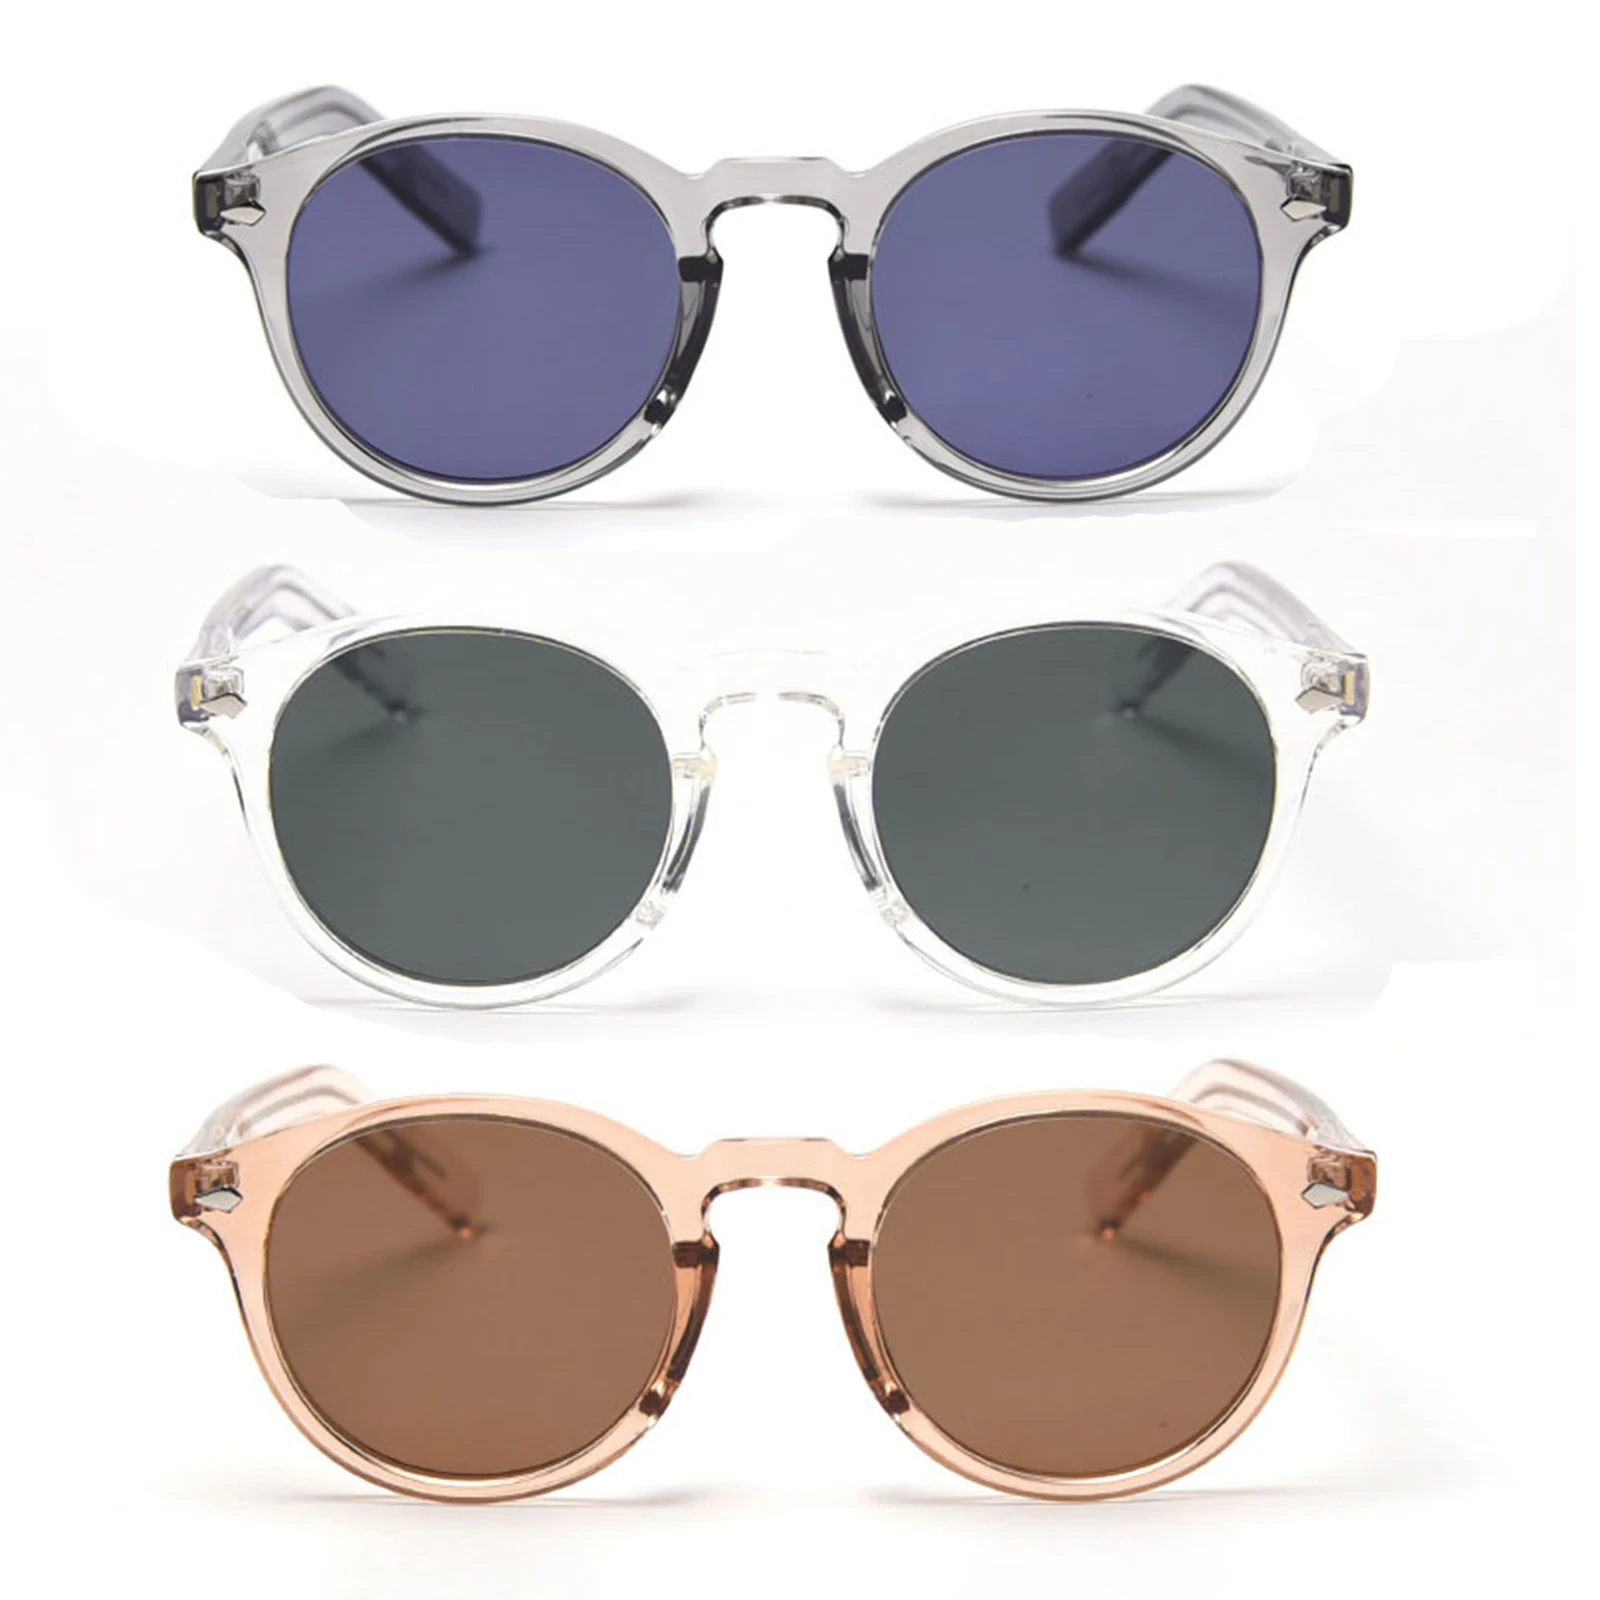 

2023 New arrival round shades sunglasses TR90 frames vintage polarized sun glasses women men